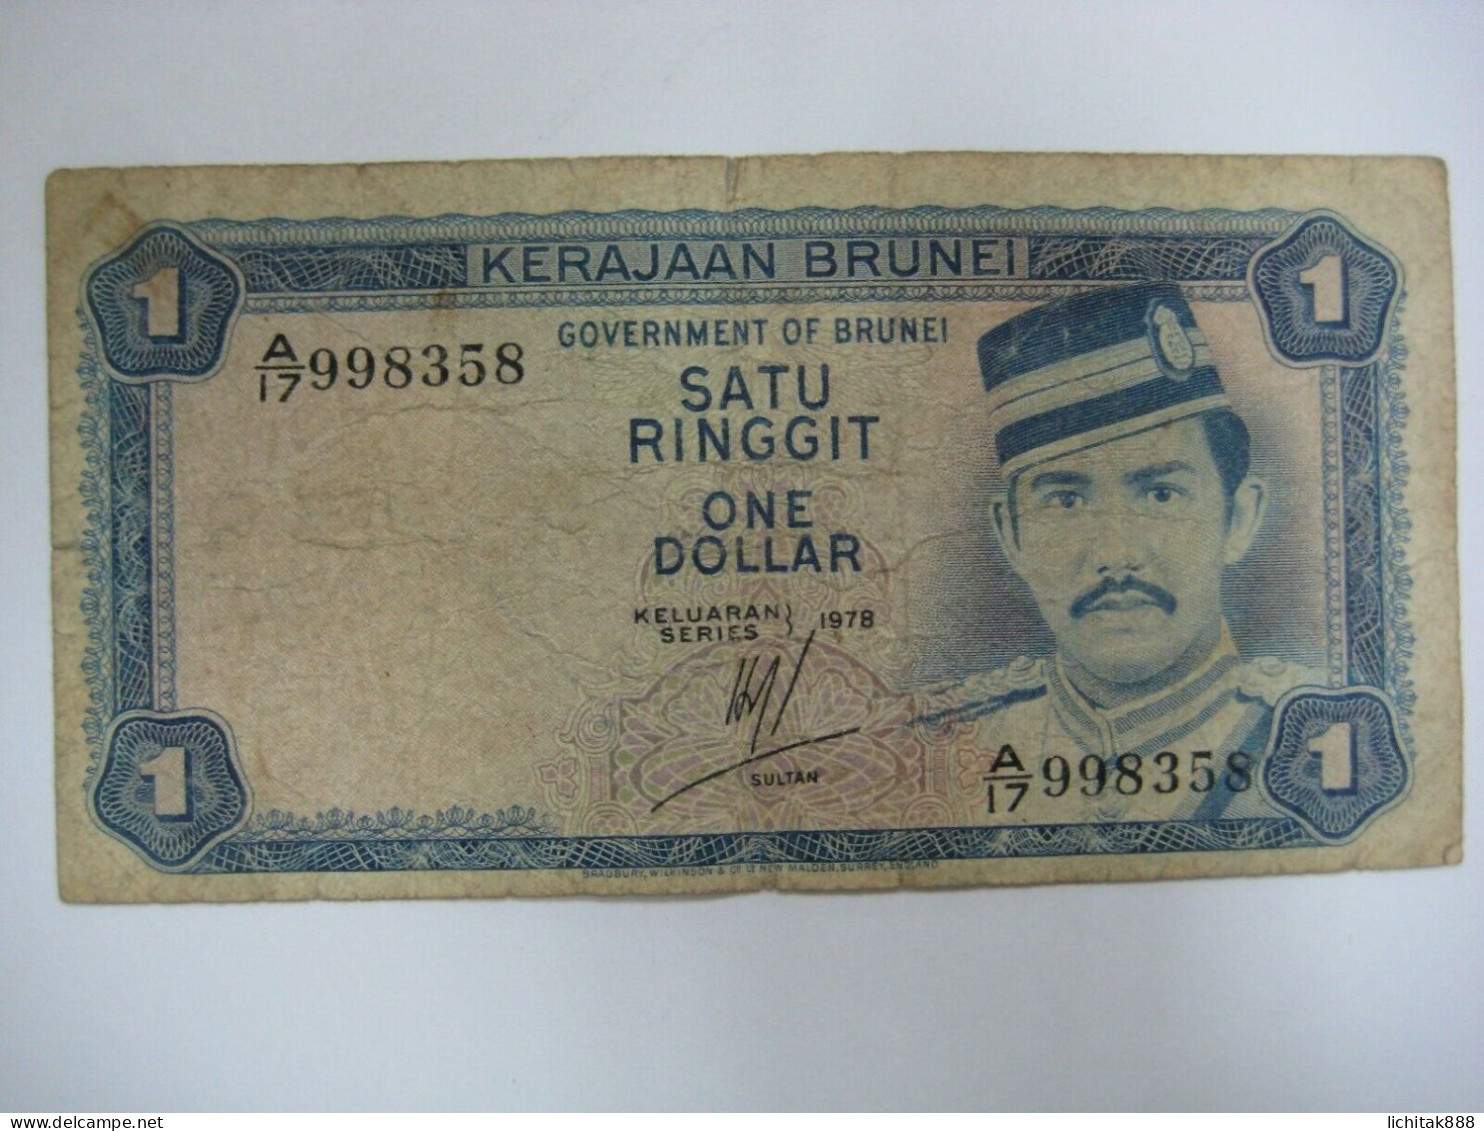 BRUNEI DARUSSALAM 1 RINGGIT $1 1978 CURRENCY BANKNOTE MONEY - Brunei